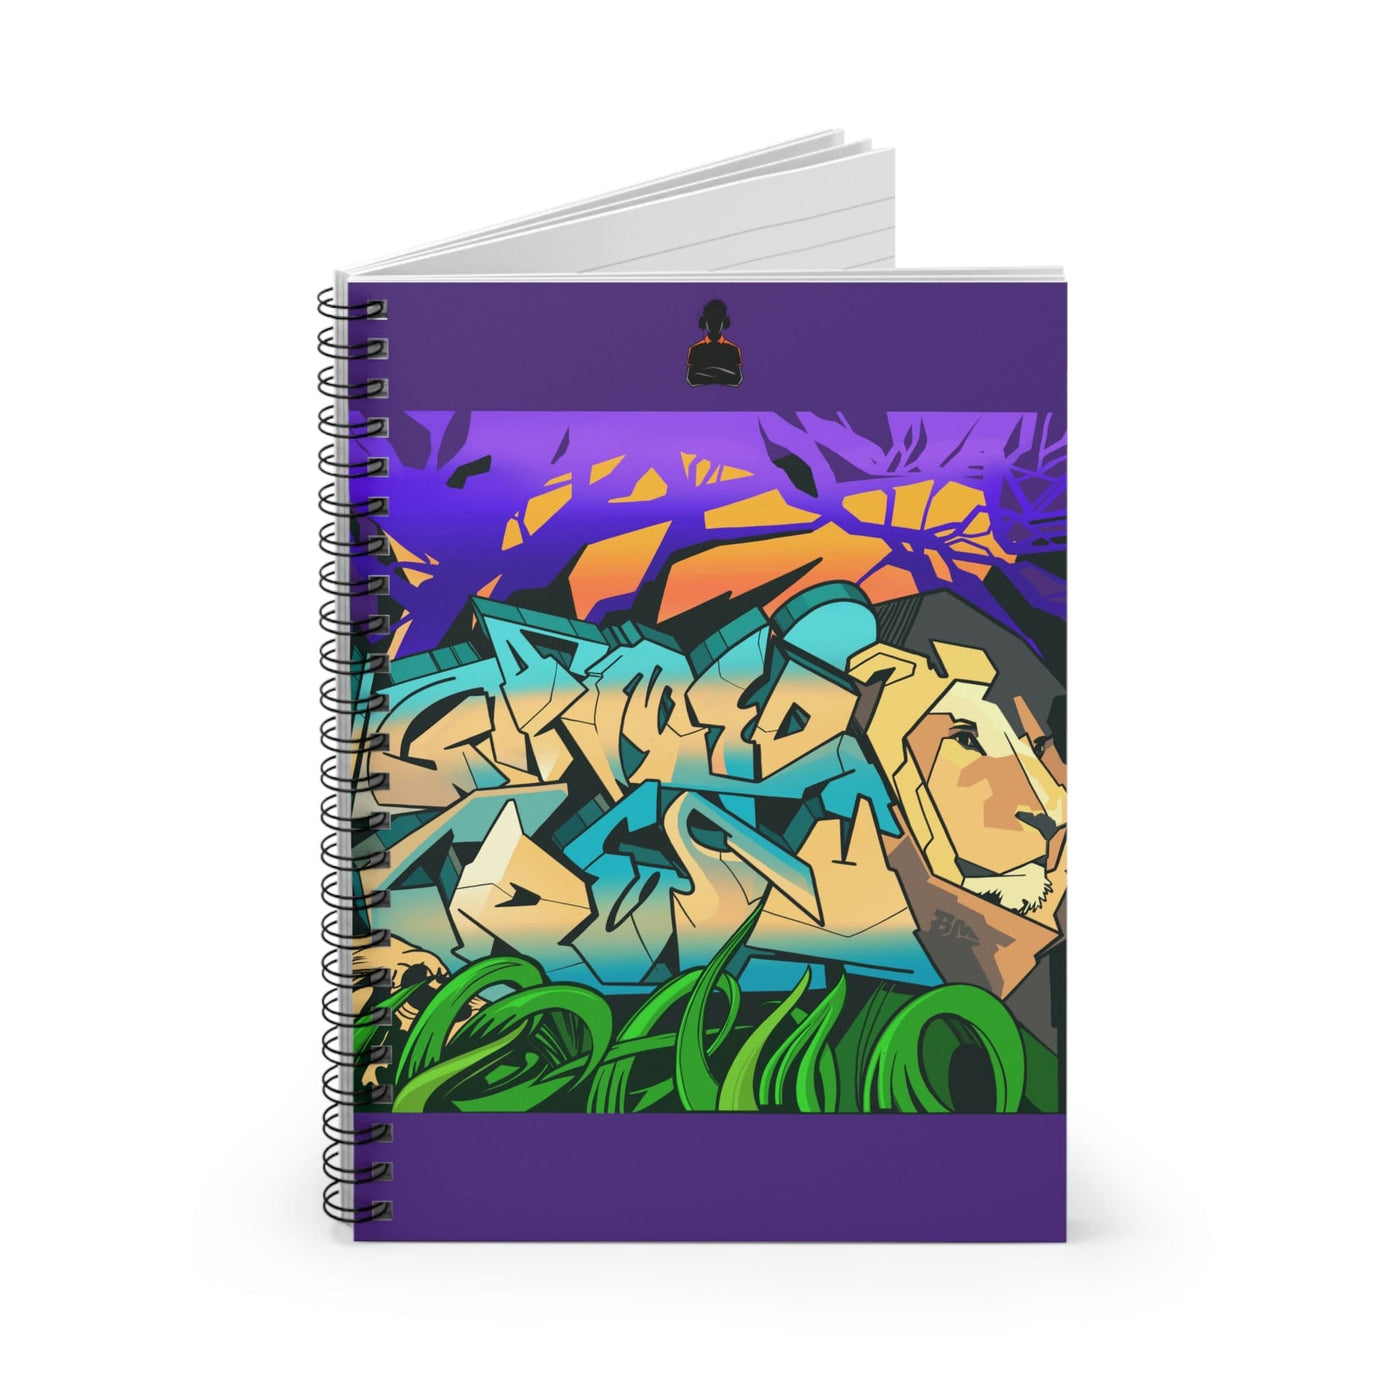 The Gamer Fresh Graffiti | Streamer All Art Lion NYC Mural | Royal Purple Spiral Notebook - Ruled Line